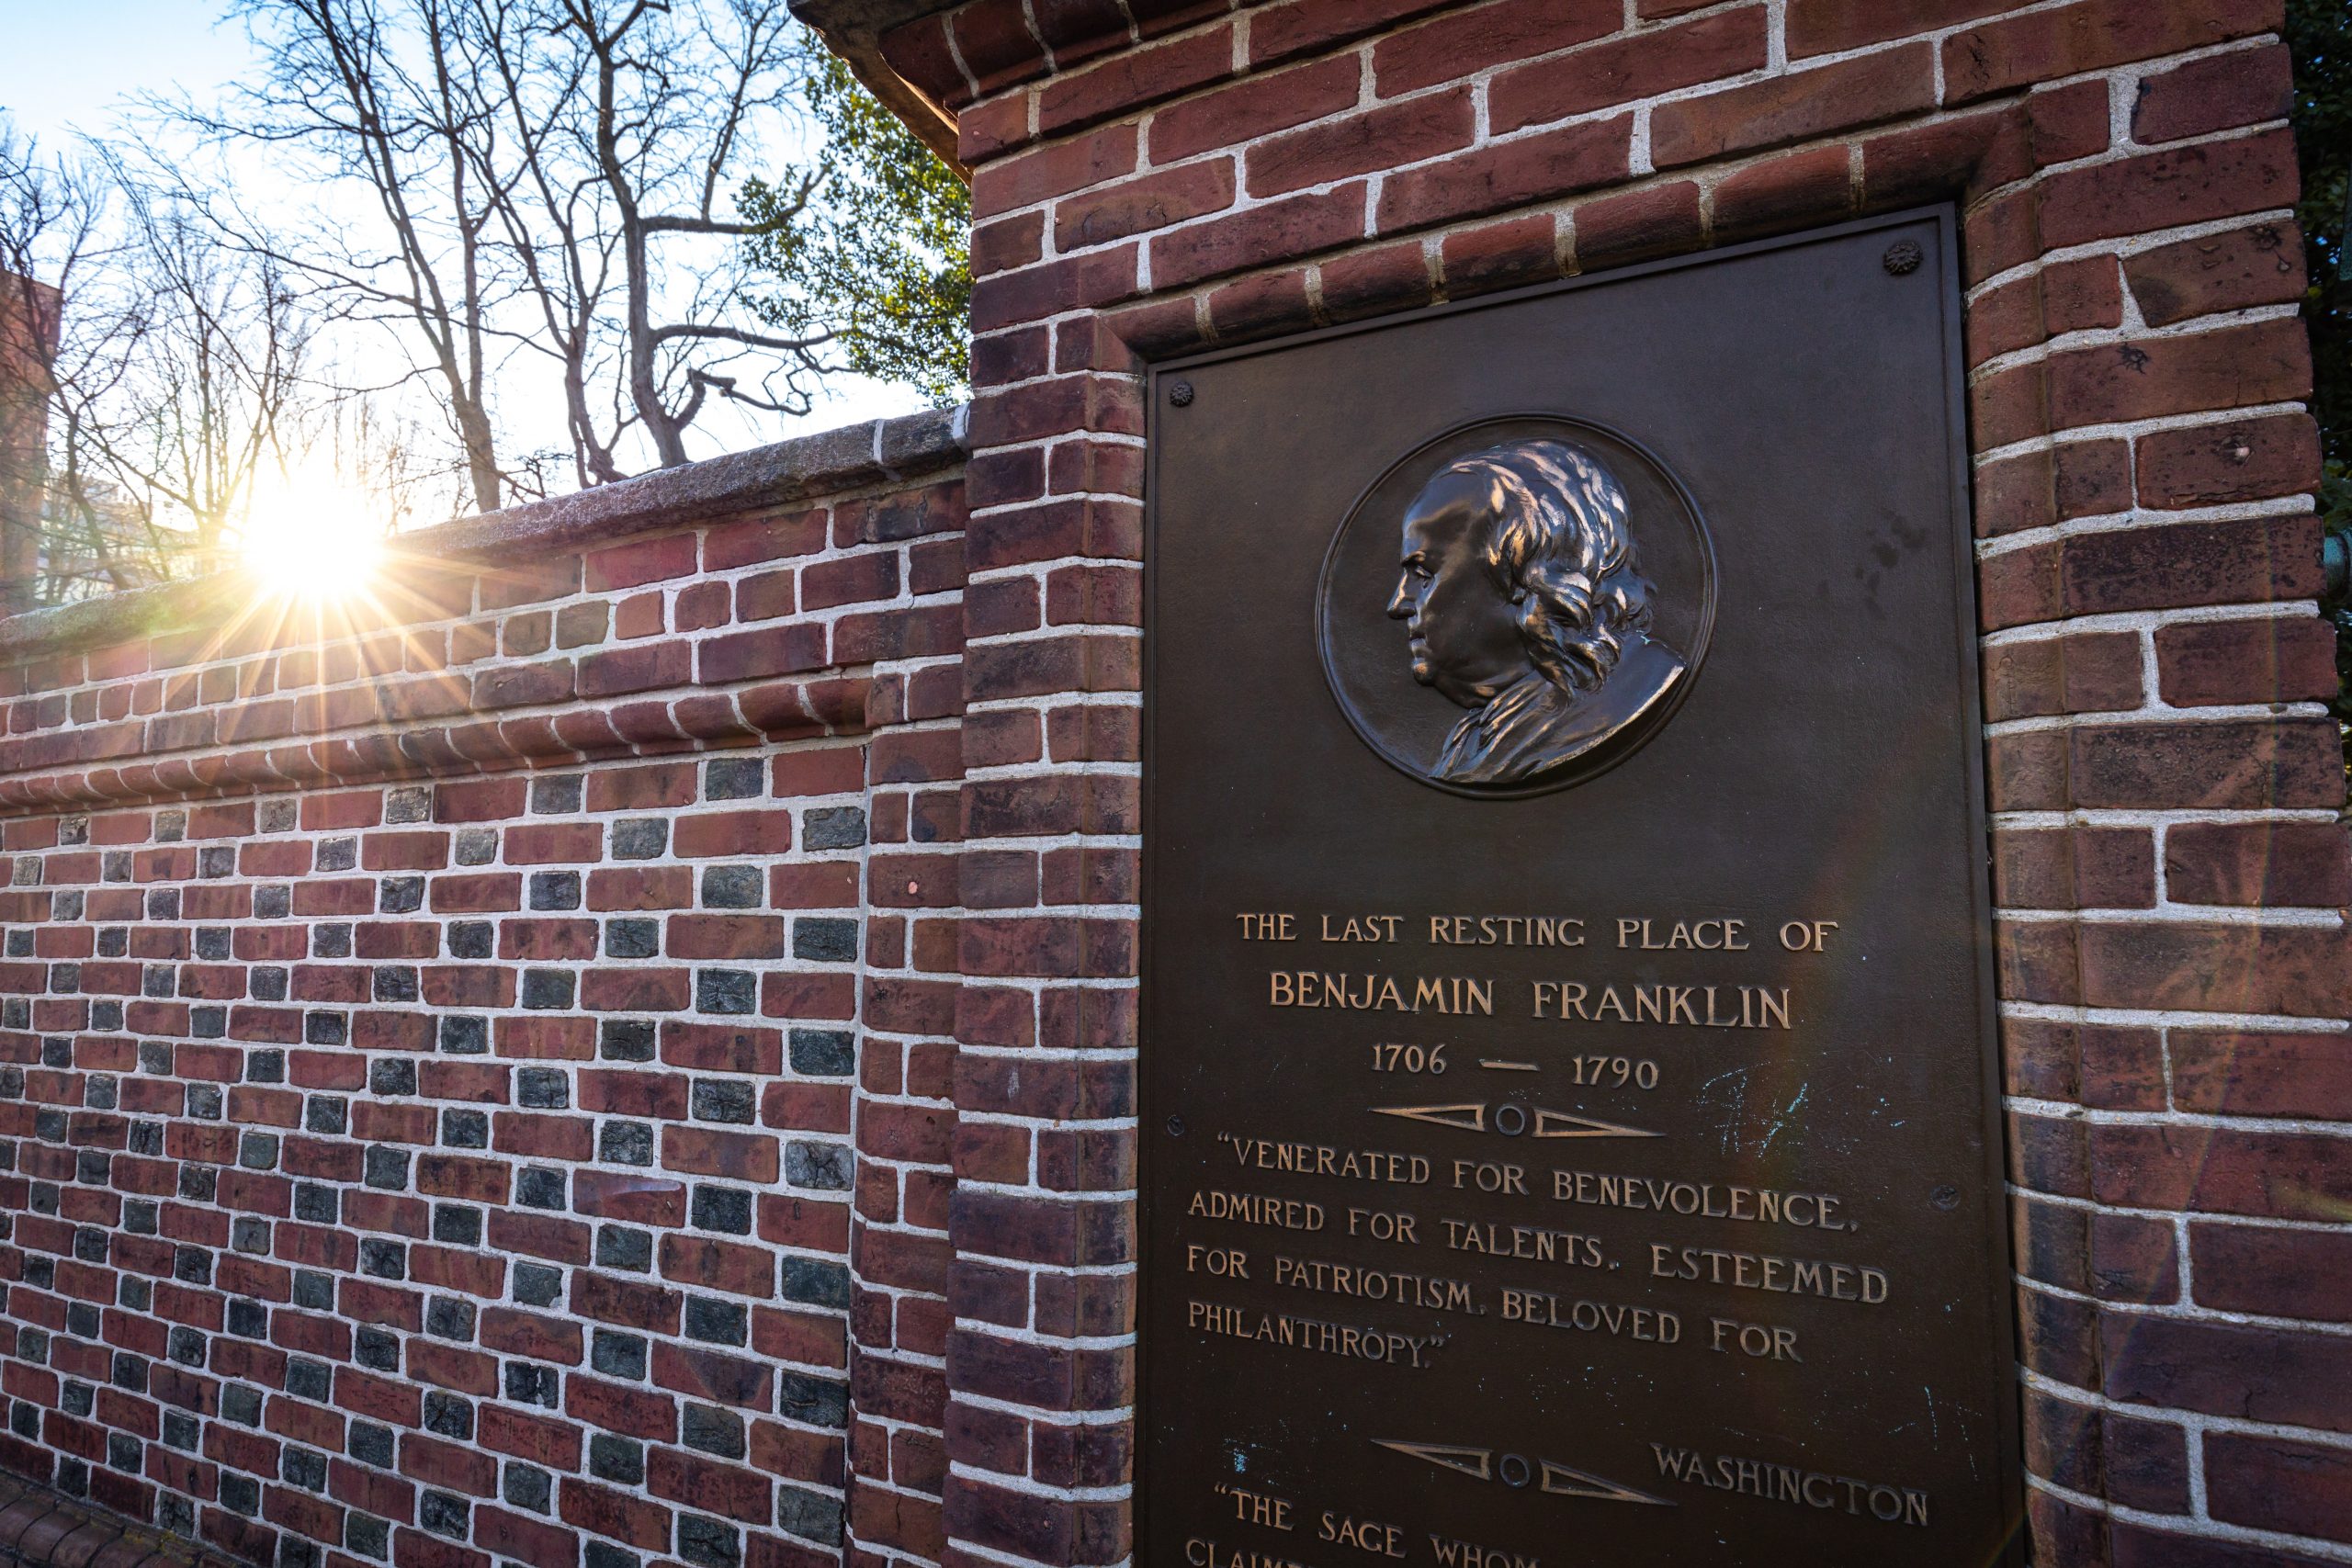 Benjamin Franklin Historical Plaque on Brick Wall at Sunset